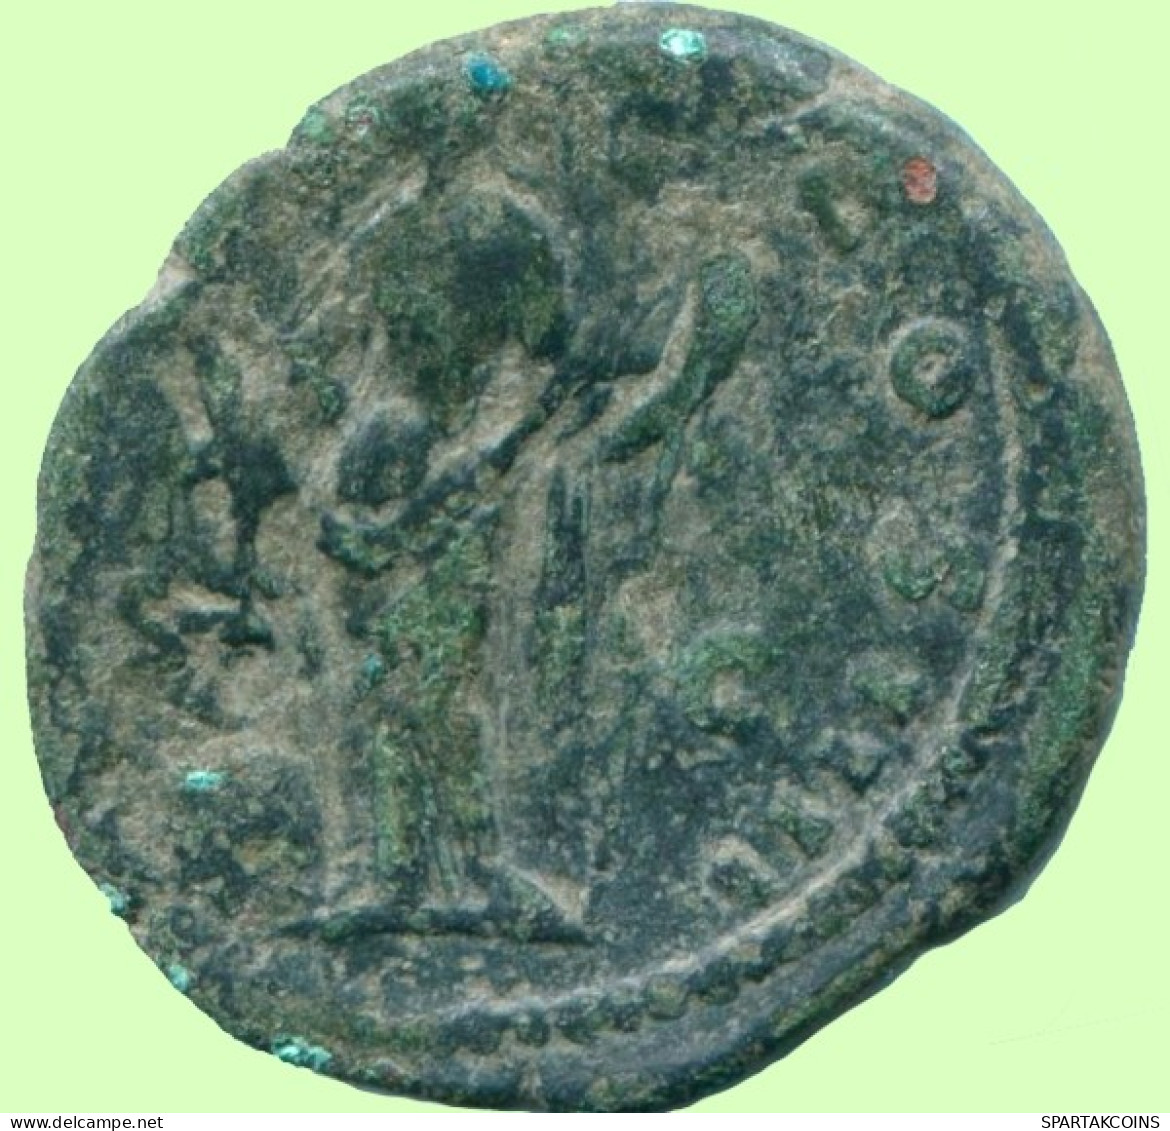 FAUSTINA AE AS Antike RÖMISCHEN KAISERZEIT Münze 8.94g/25.77mm #ANC13511.66.D.A - La Dinastía Antonina (96 / 192)